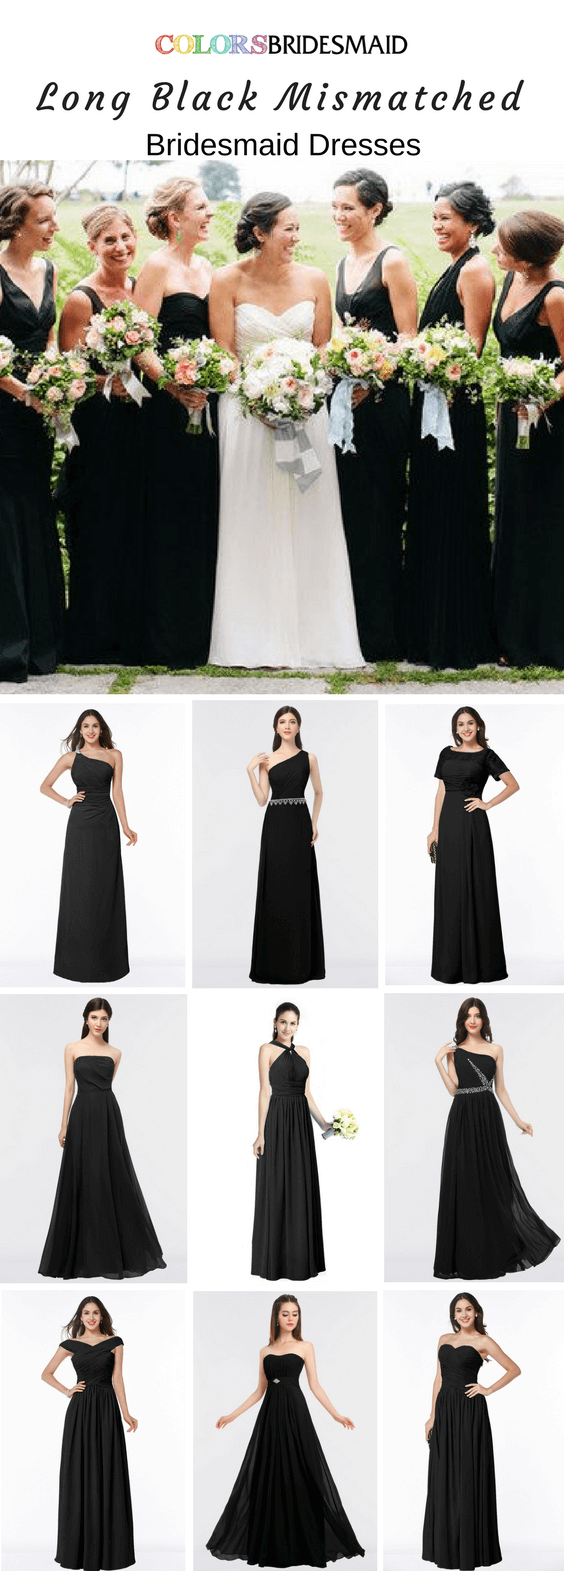 Best Long Black Bridesmaid Dresses Under 100